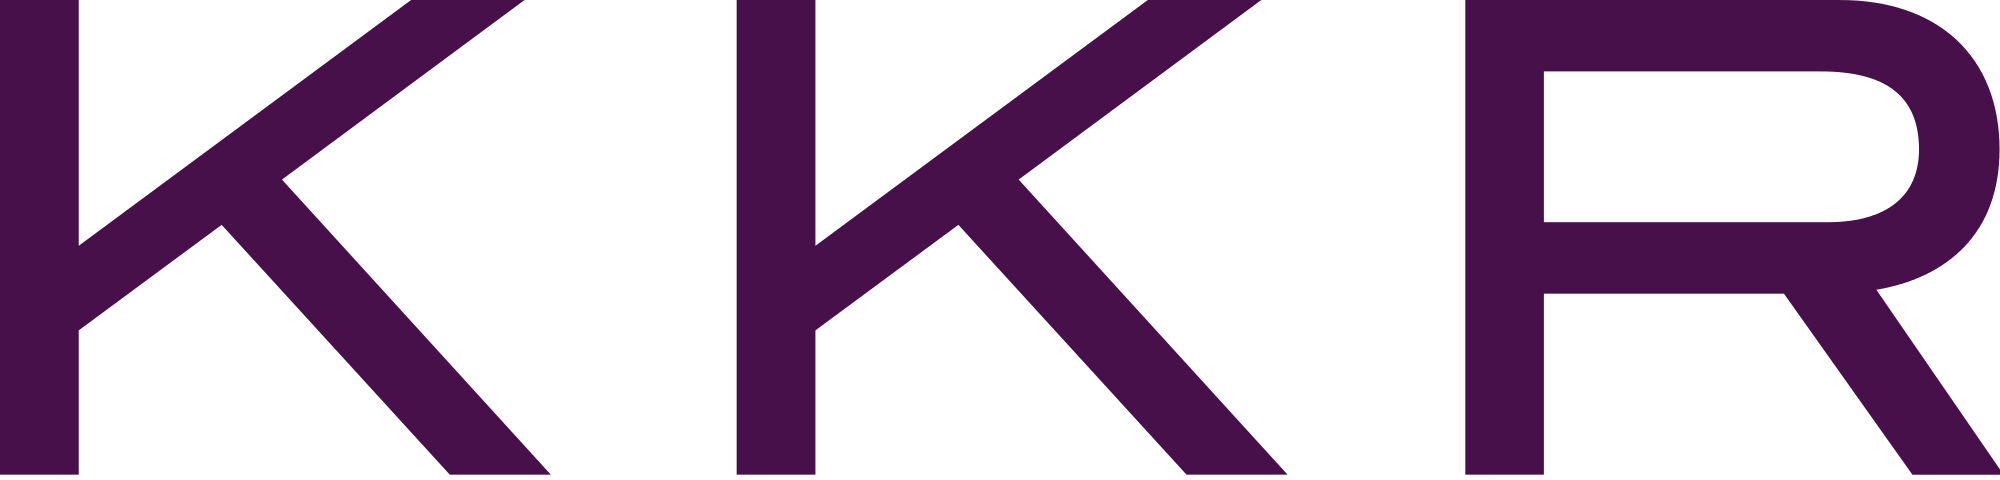 KKR Logo - File:Kohlberg Kravis Roberts (logo).svg - Wikimedia Commons